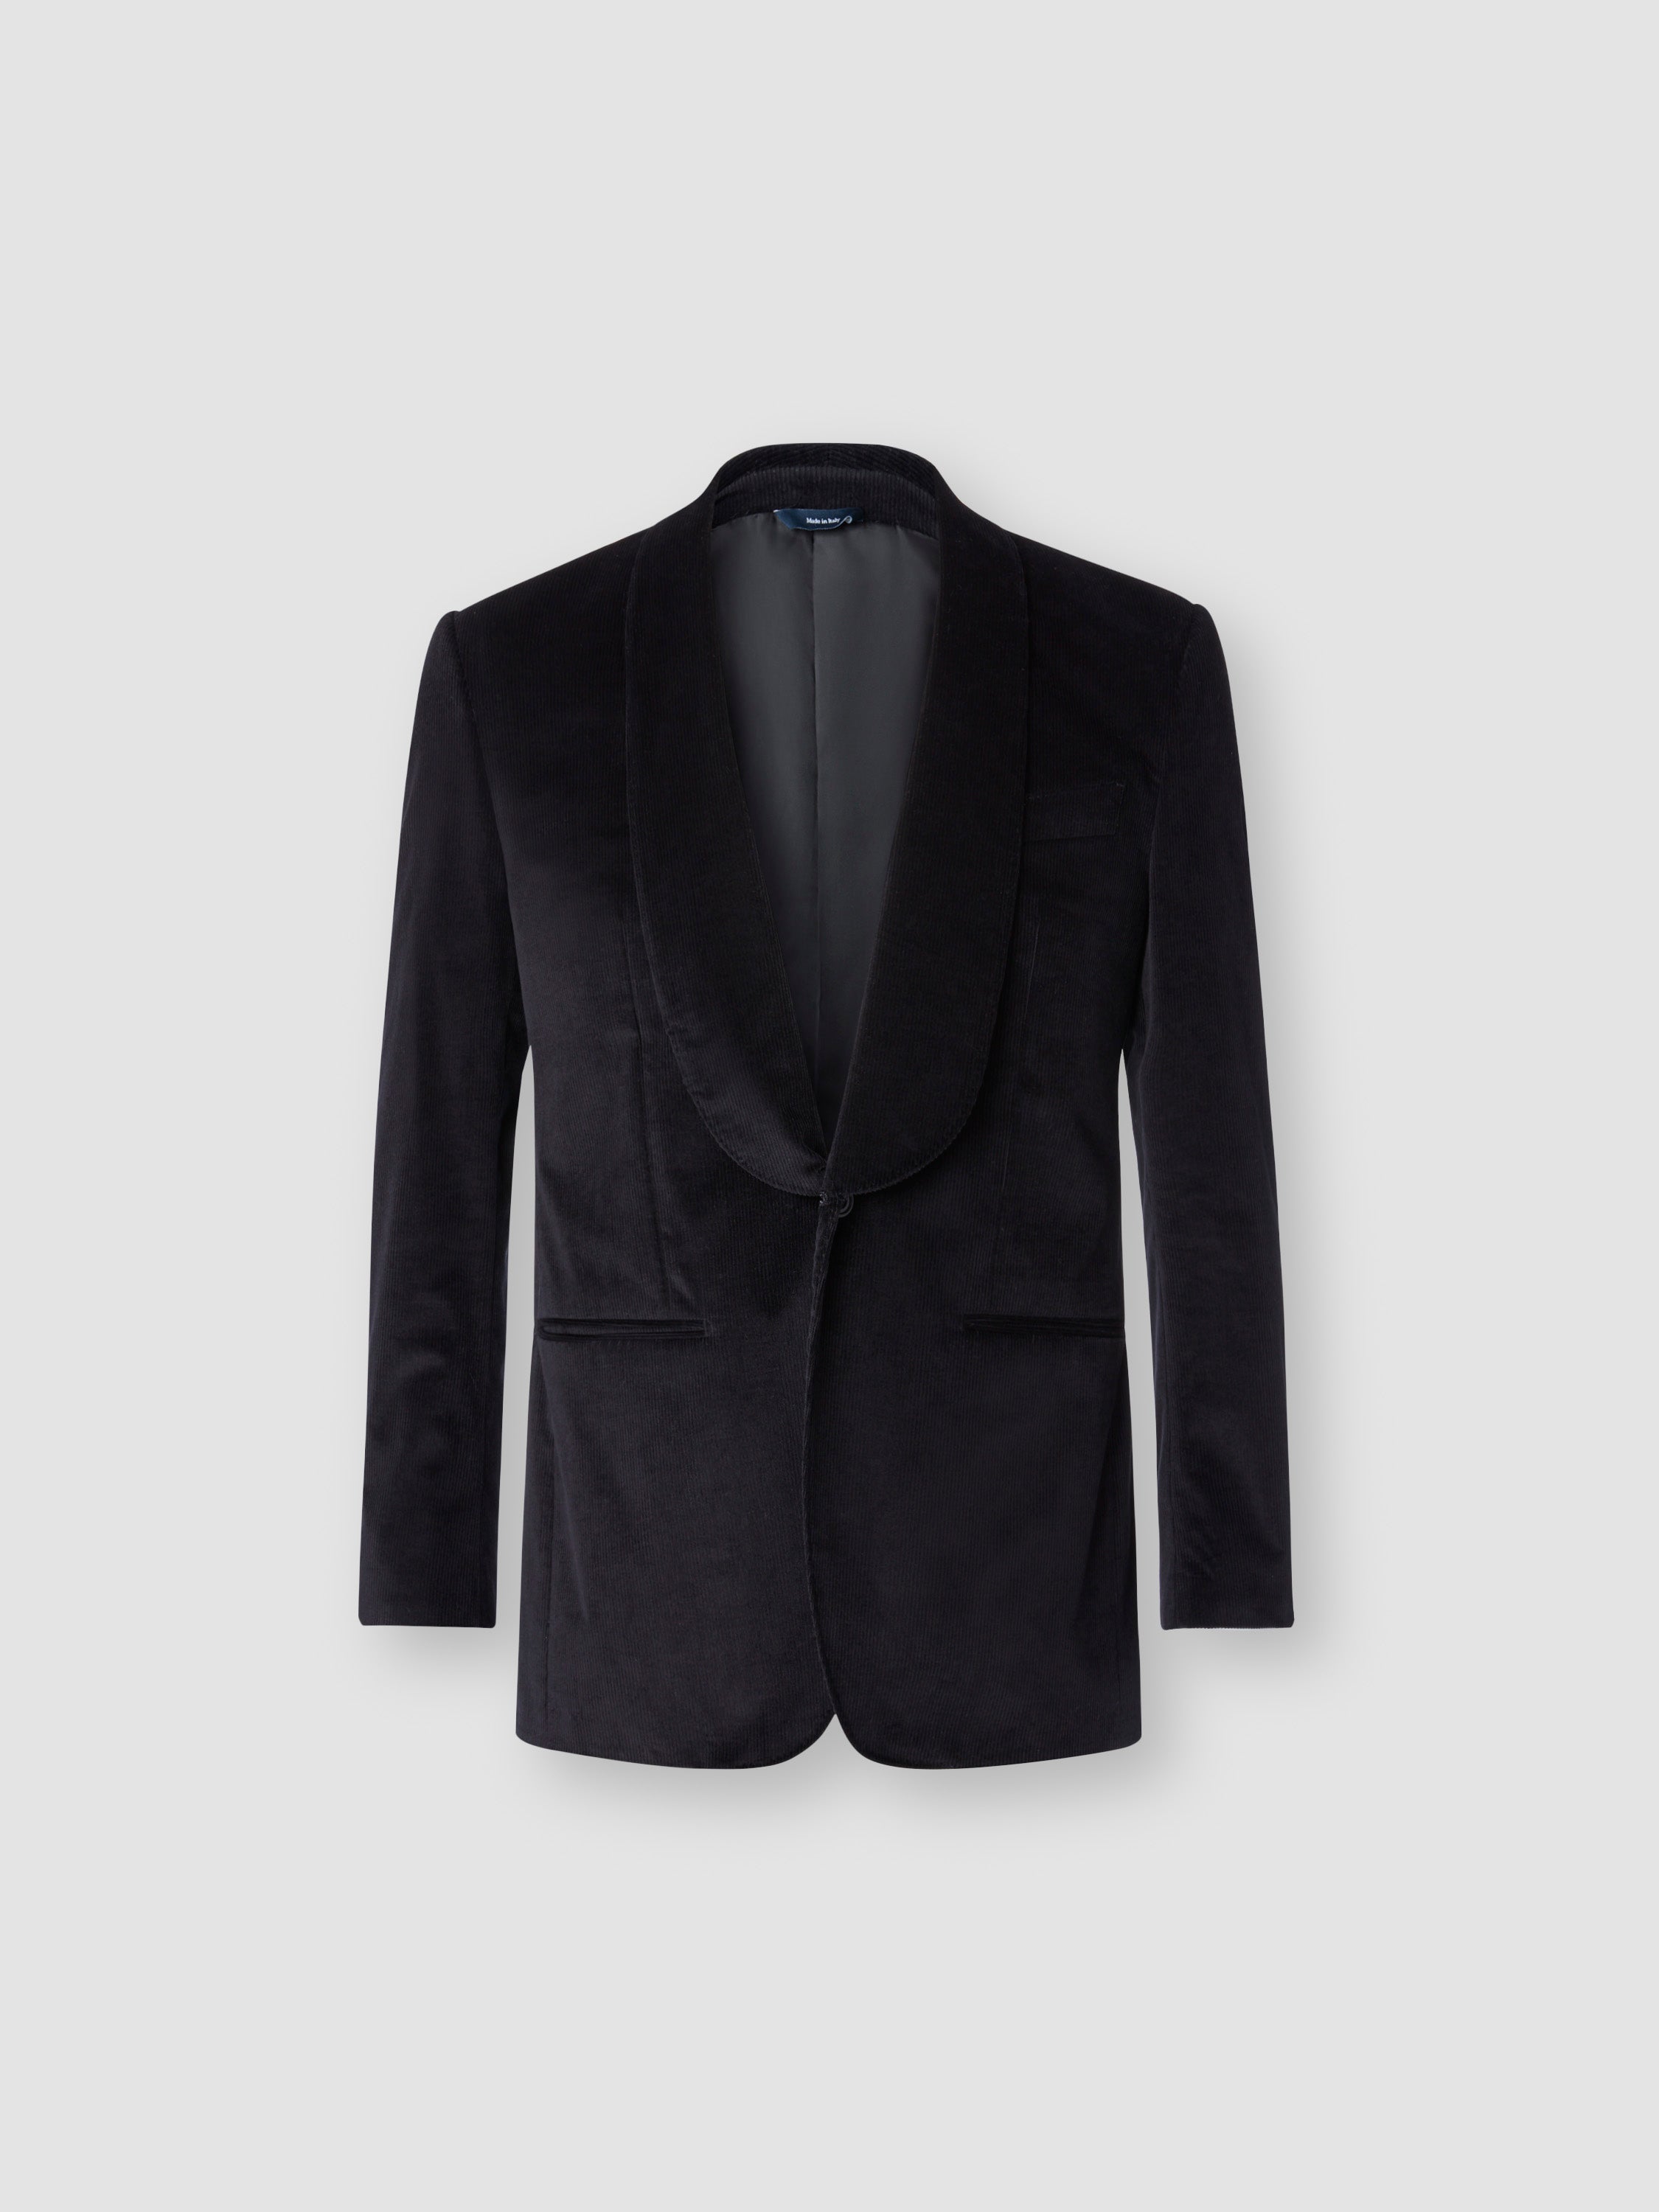 Corduroy Shawl Lapel Dinner Suit Black Jacket Product Image